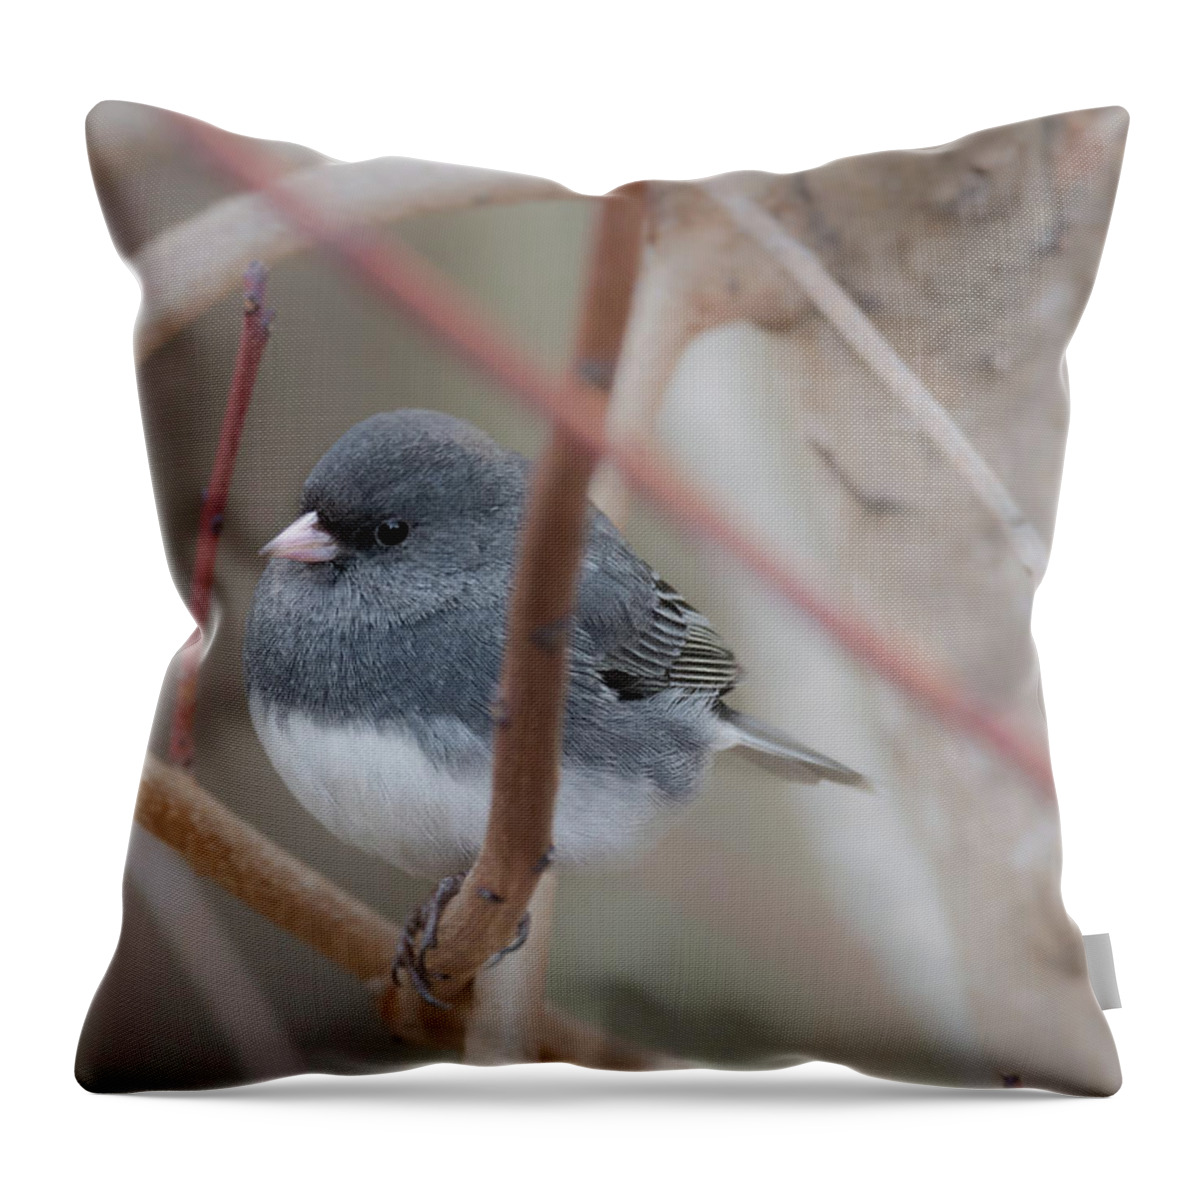 Bird Throw Pillow featuring the photograph Plumpy by Ian Sempowski